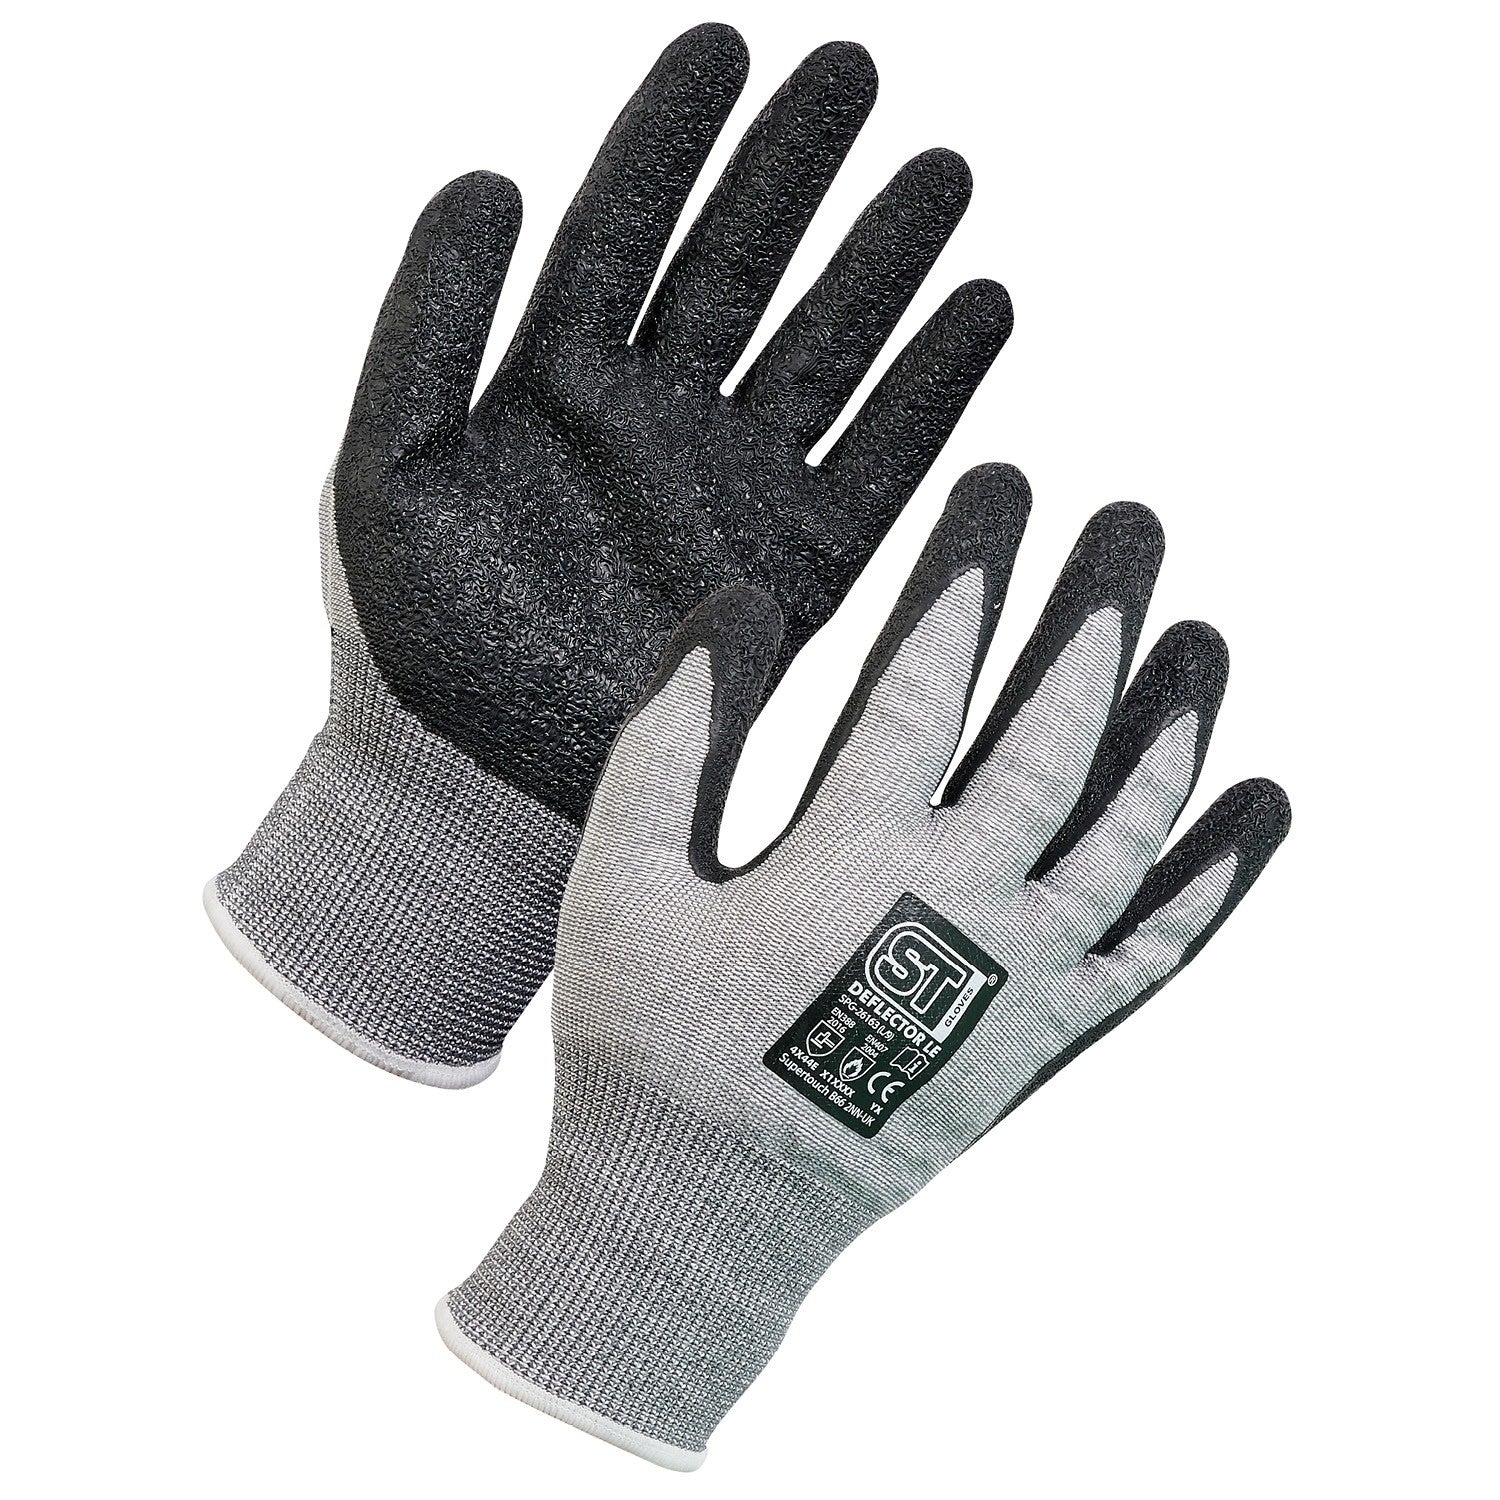 Supertouch Supertouch Deflector LE Cut Resistant Gloves - G106